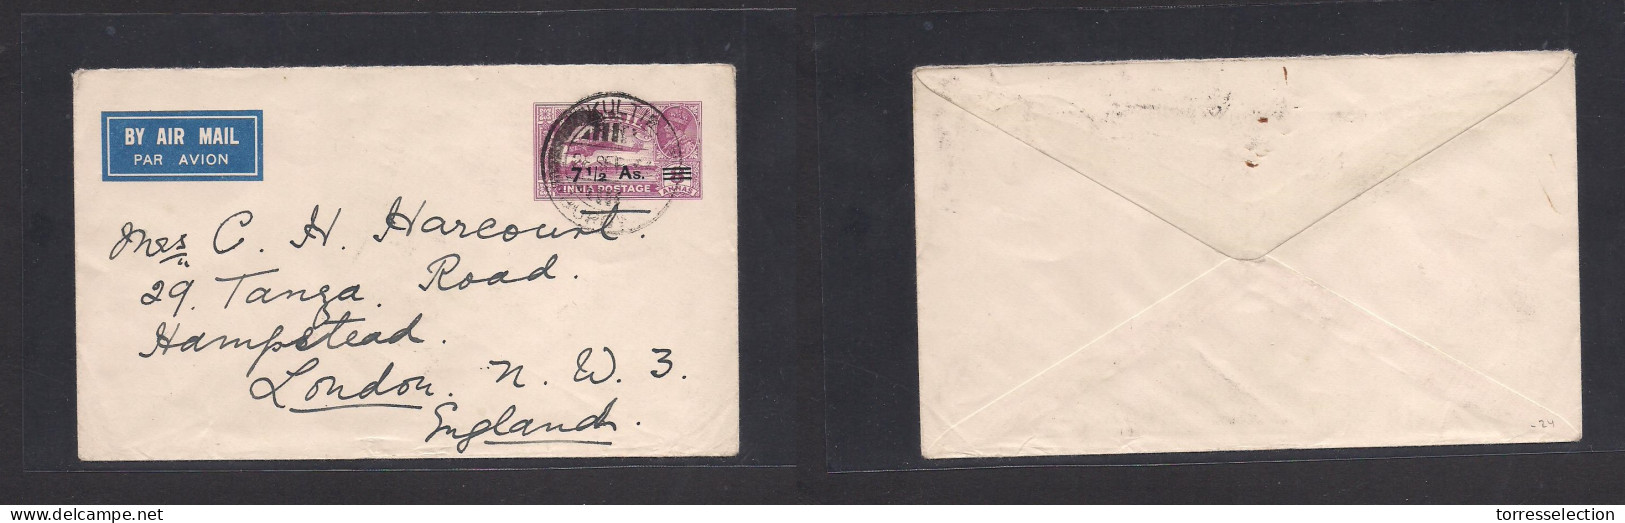 BURMA. 1936 (28 Sept) Kulti - UK, London 7 1/c A Ovptd Air Stationary Envelope. Fine. - Burma (...-1947)